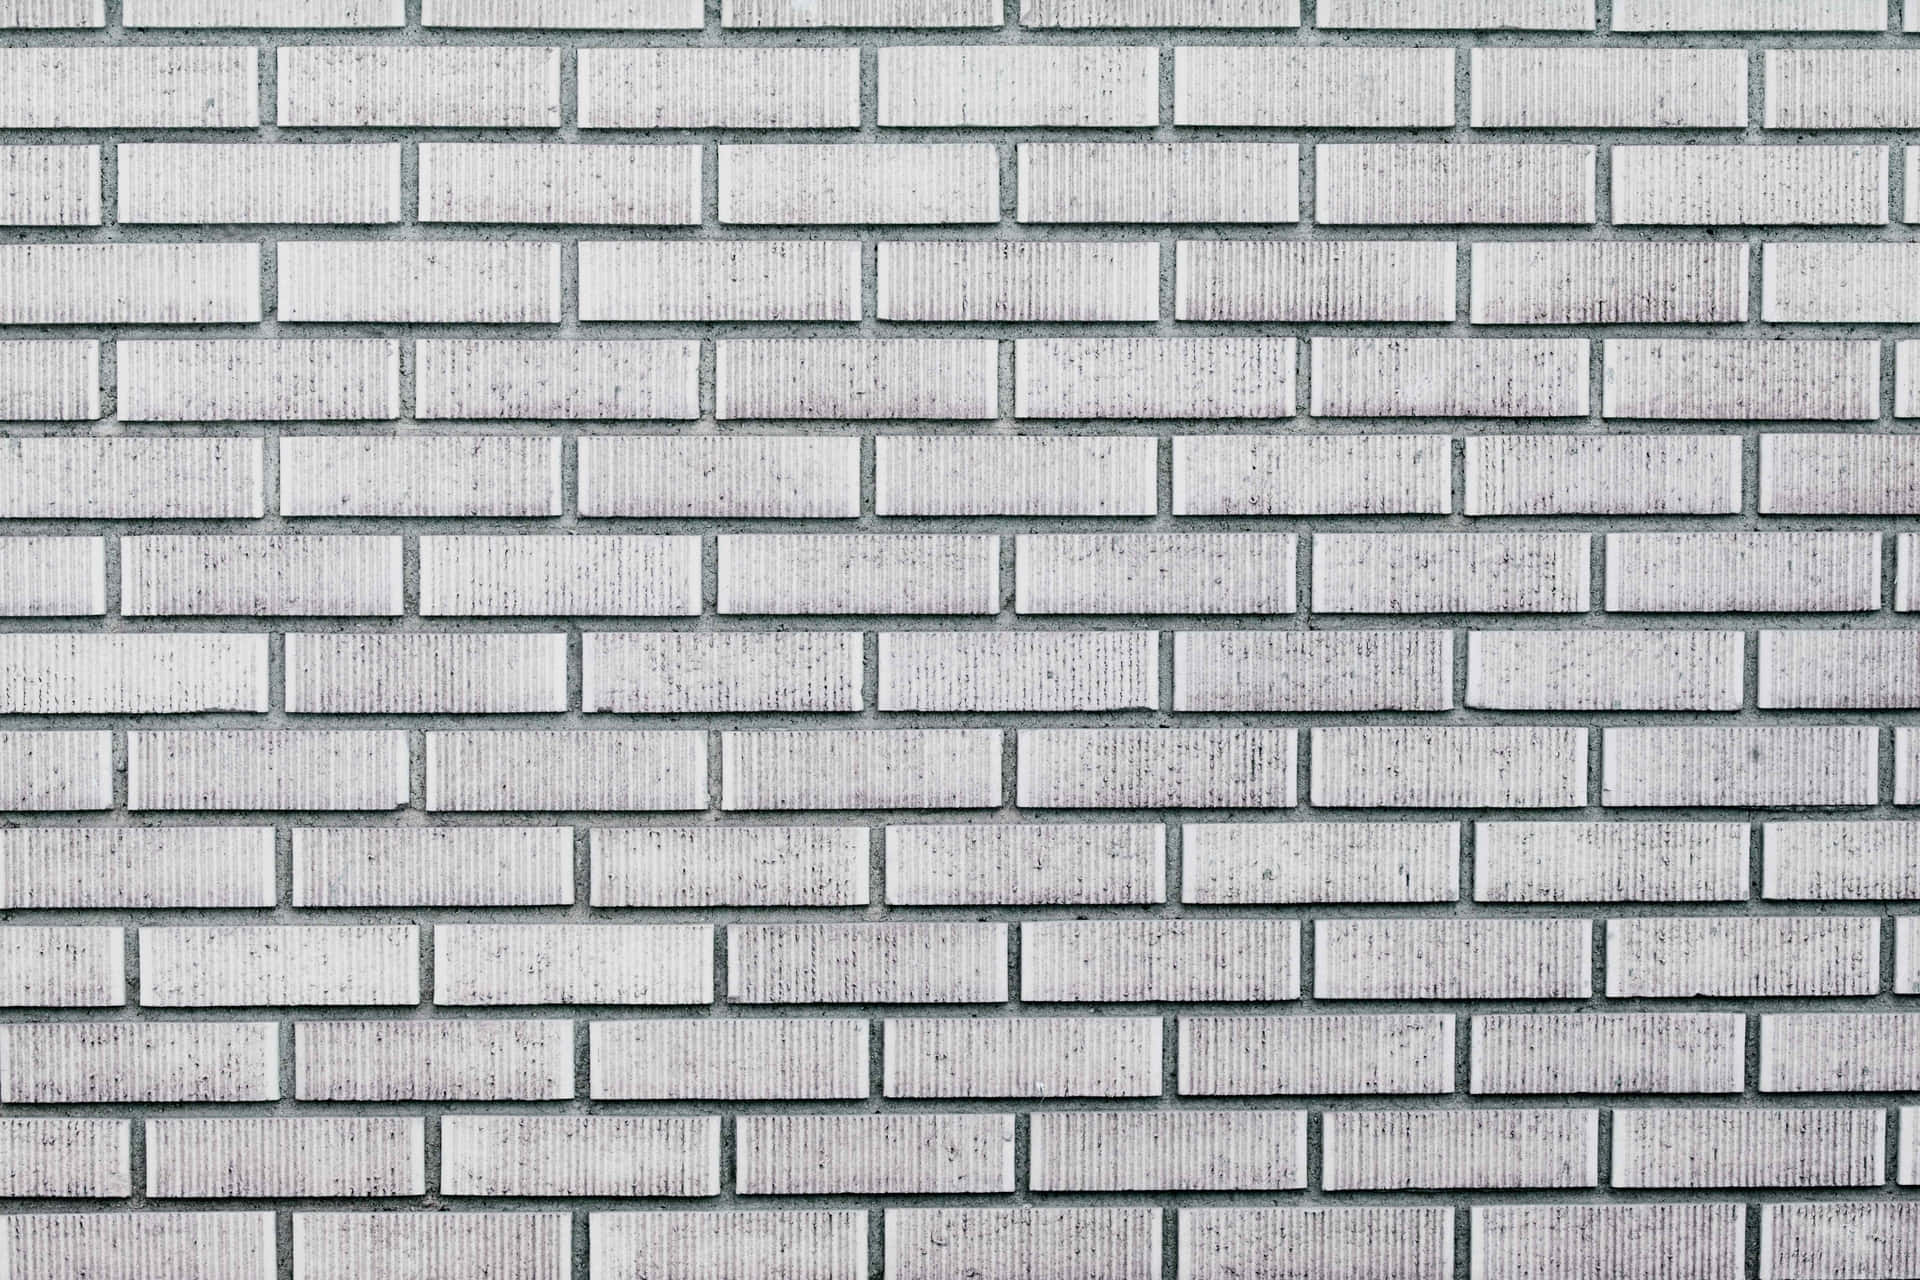 A white brick wall, providing a blank canvas for any design ideas